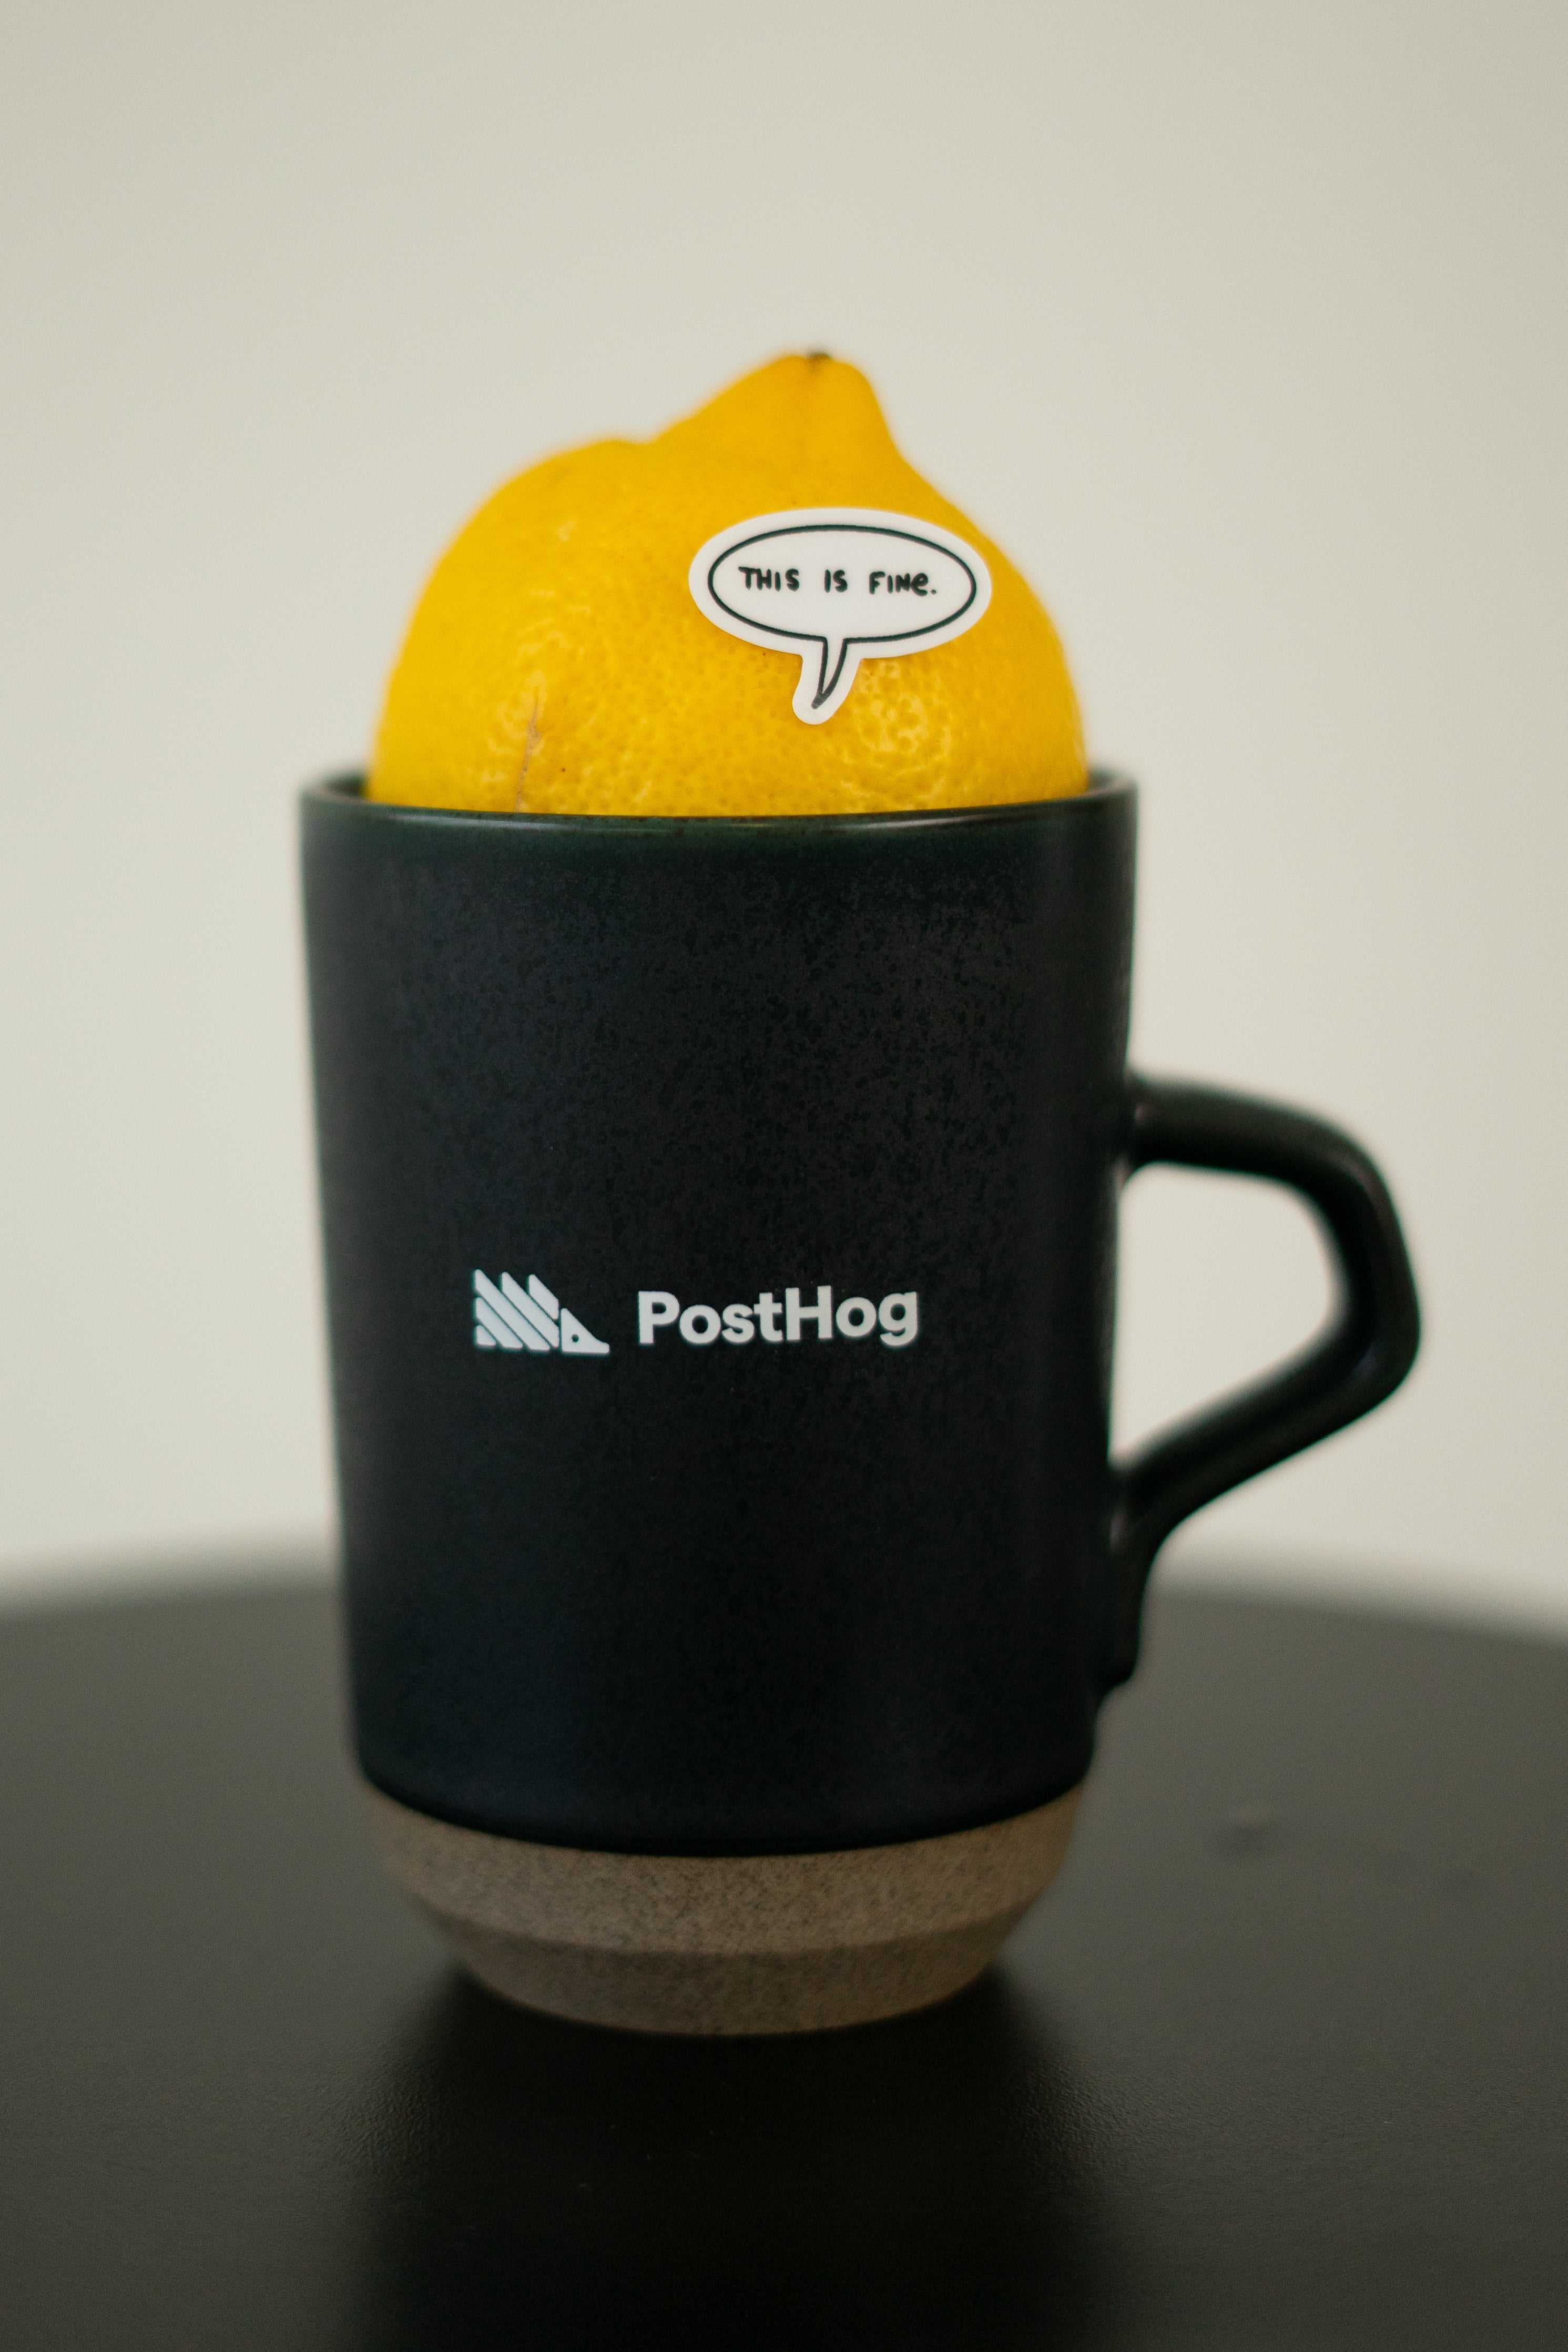 PostHog mug